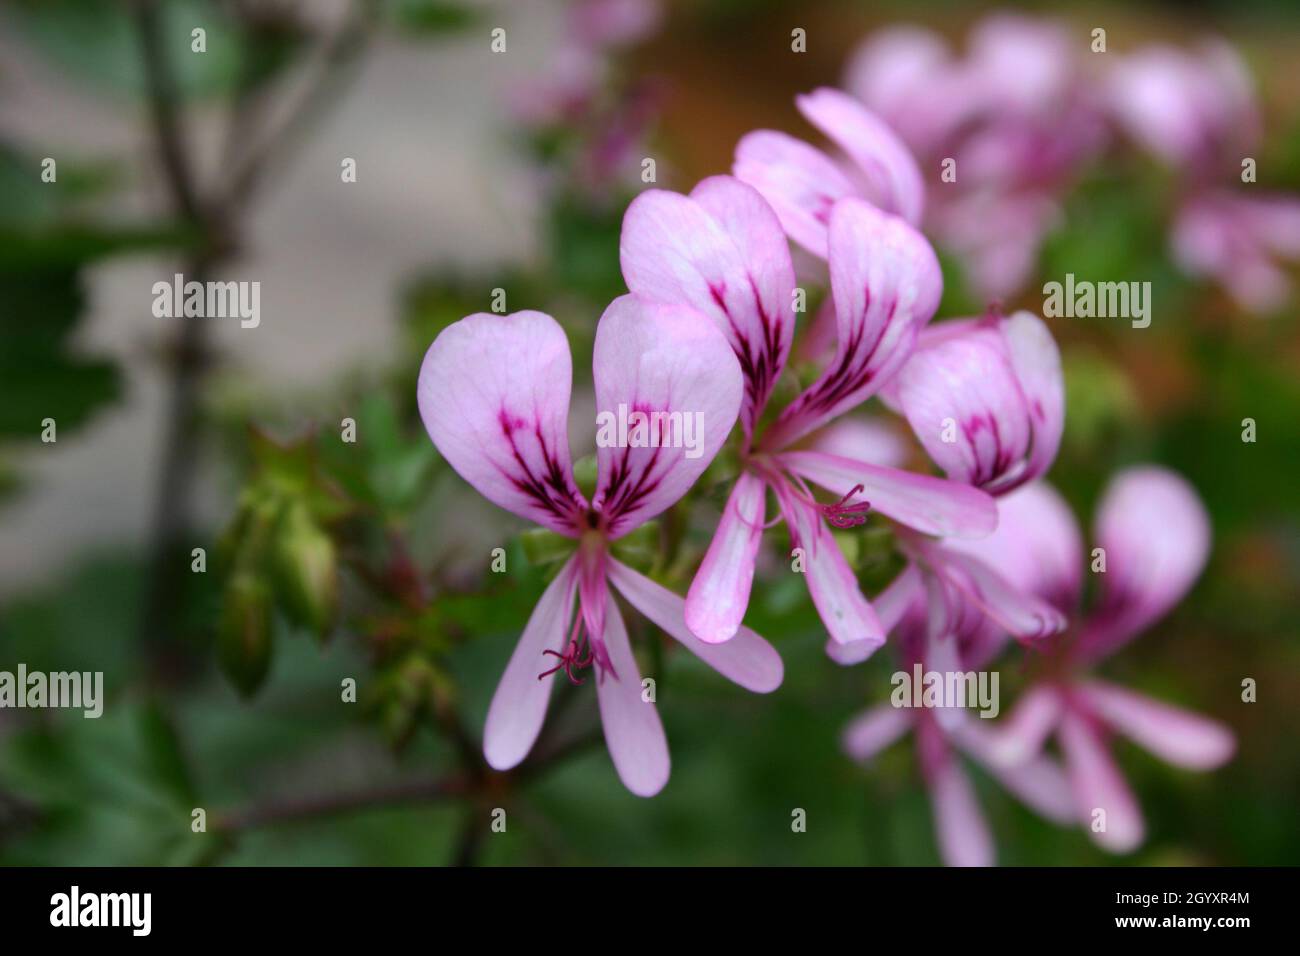 PELARGONIUM SUBLIGNOSUM FLOWERS ALSO KNOWN AS WOODY GERANIUM IS A PERENNIAL PLANT. Stock Photo